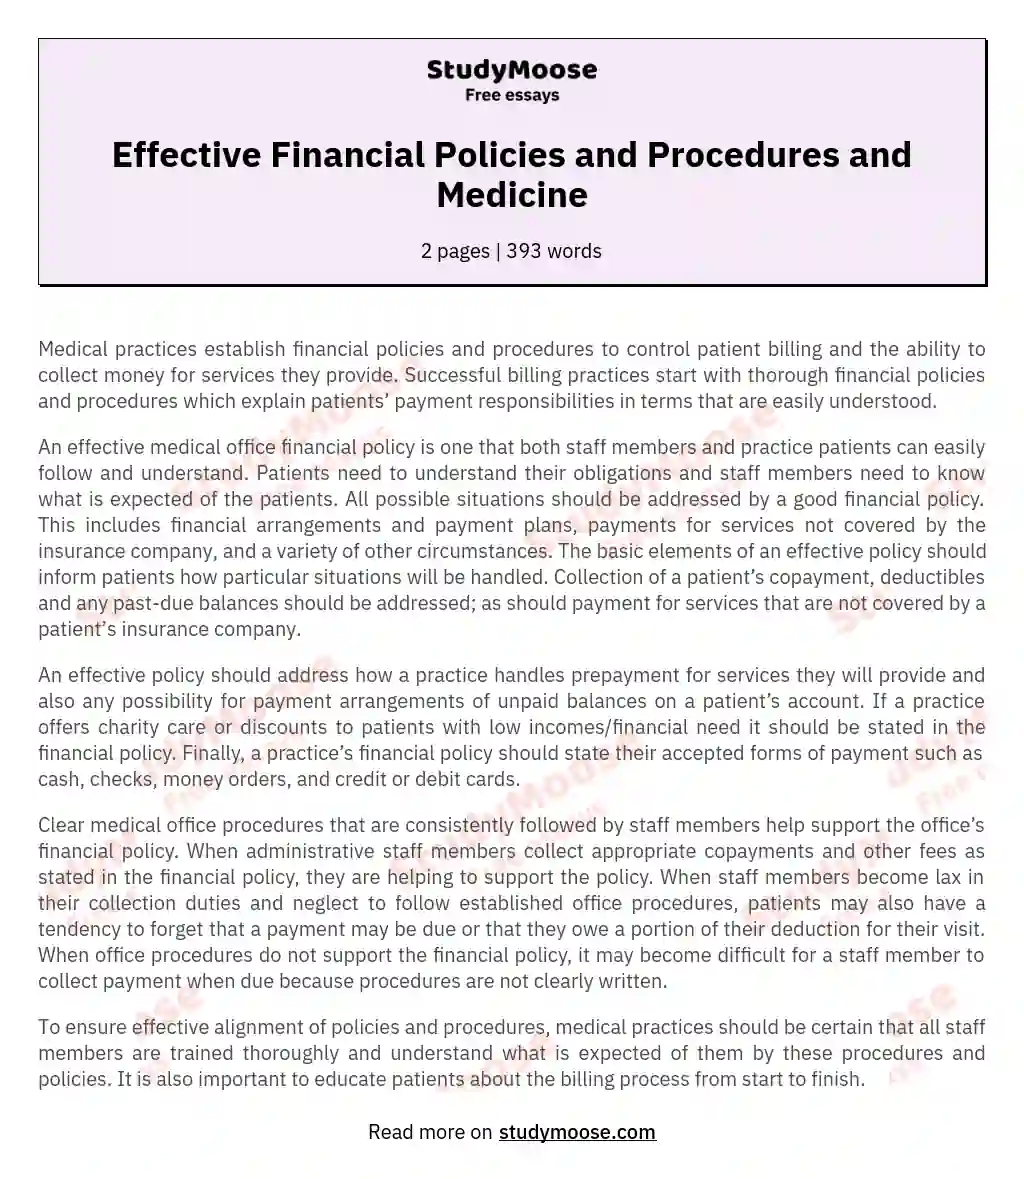 Effective Financial Policies and Procedures and Medicine